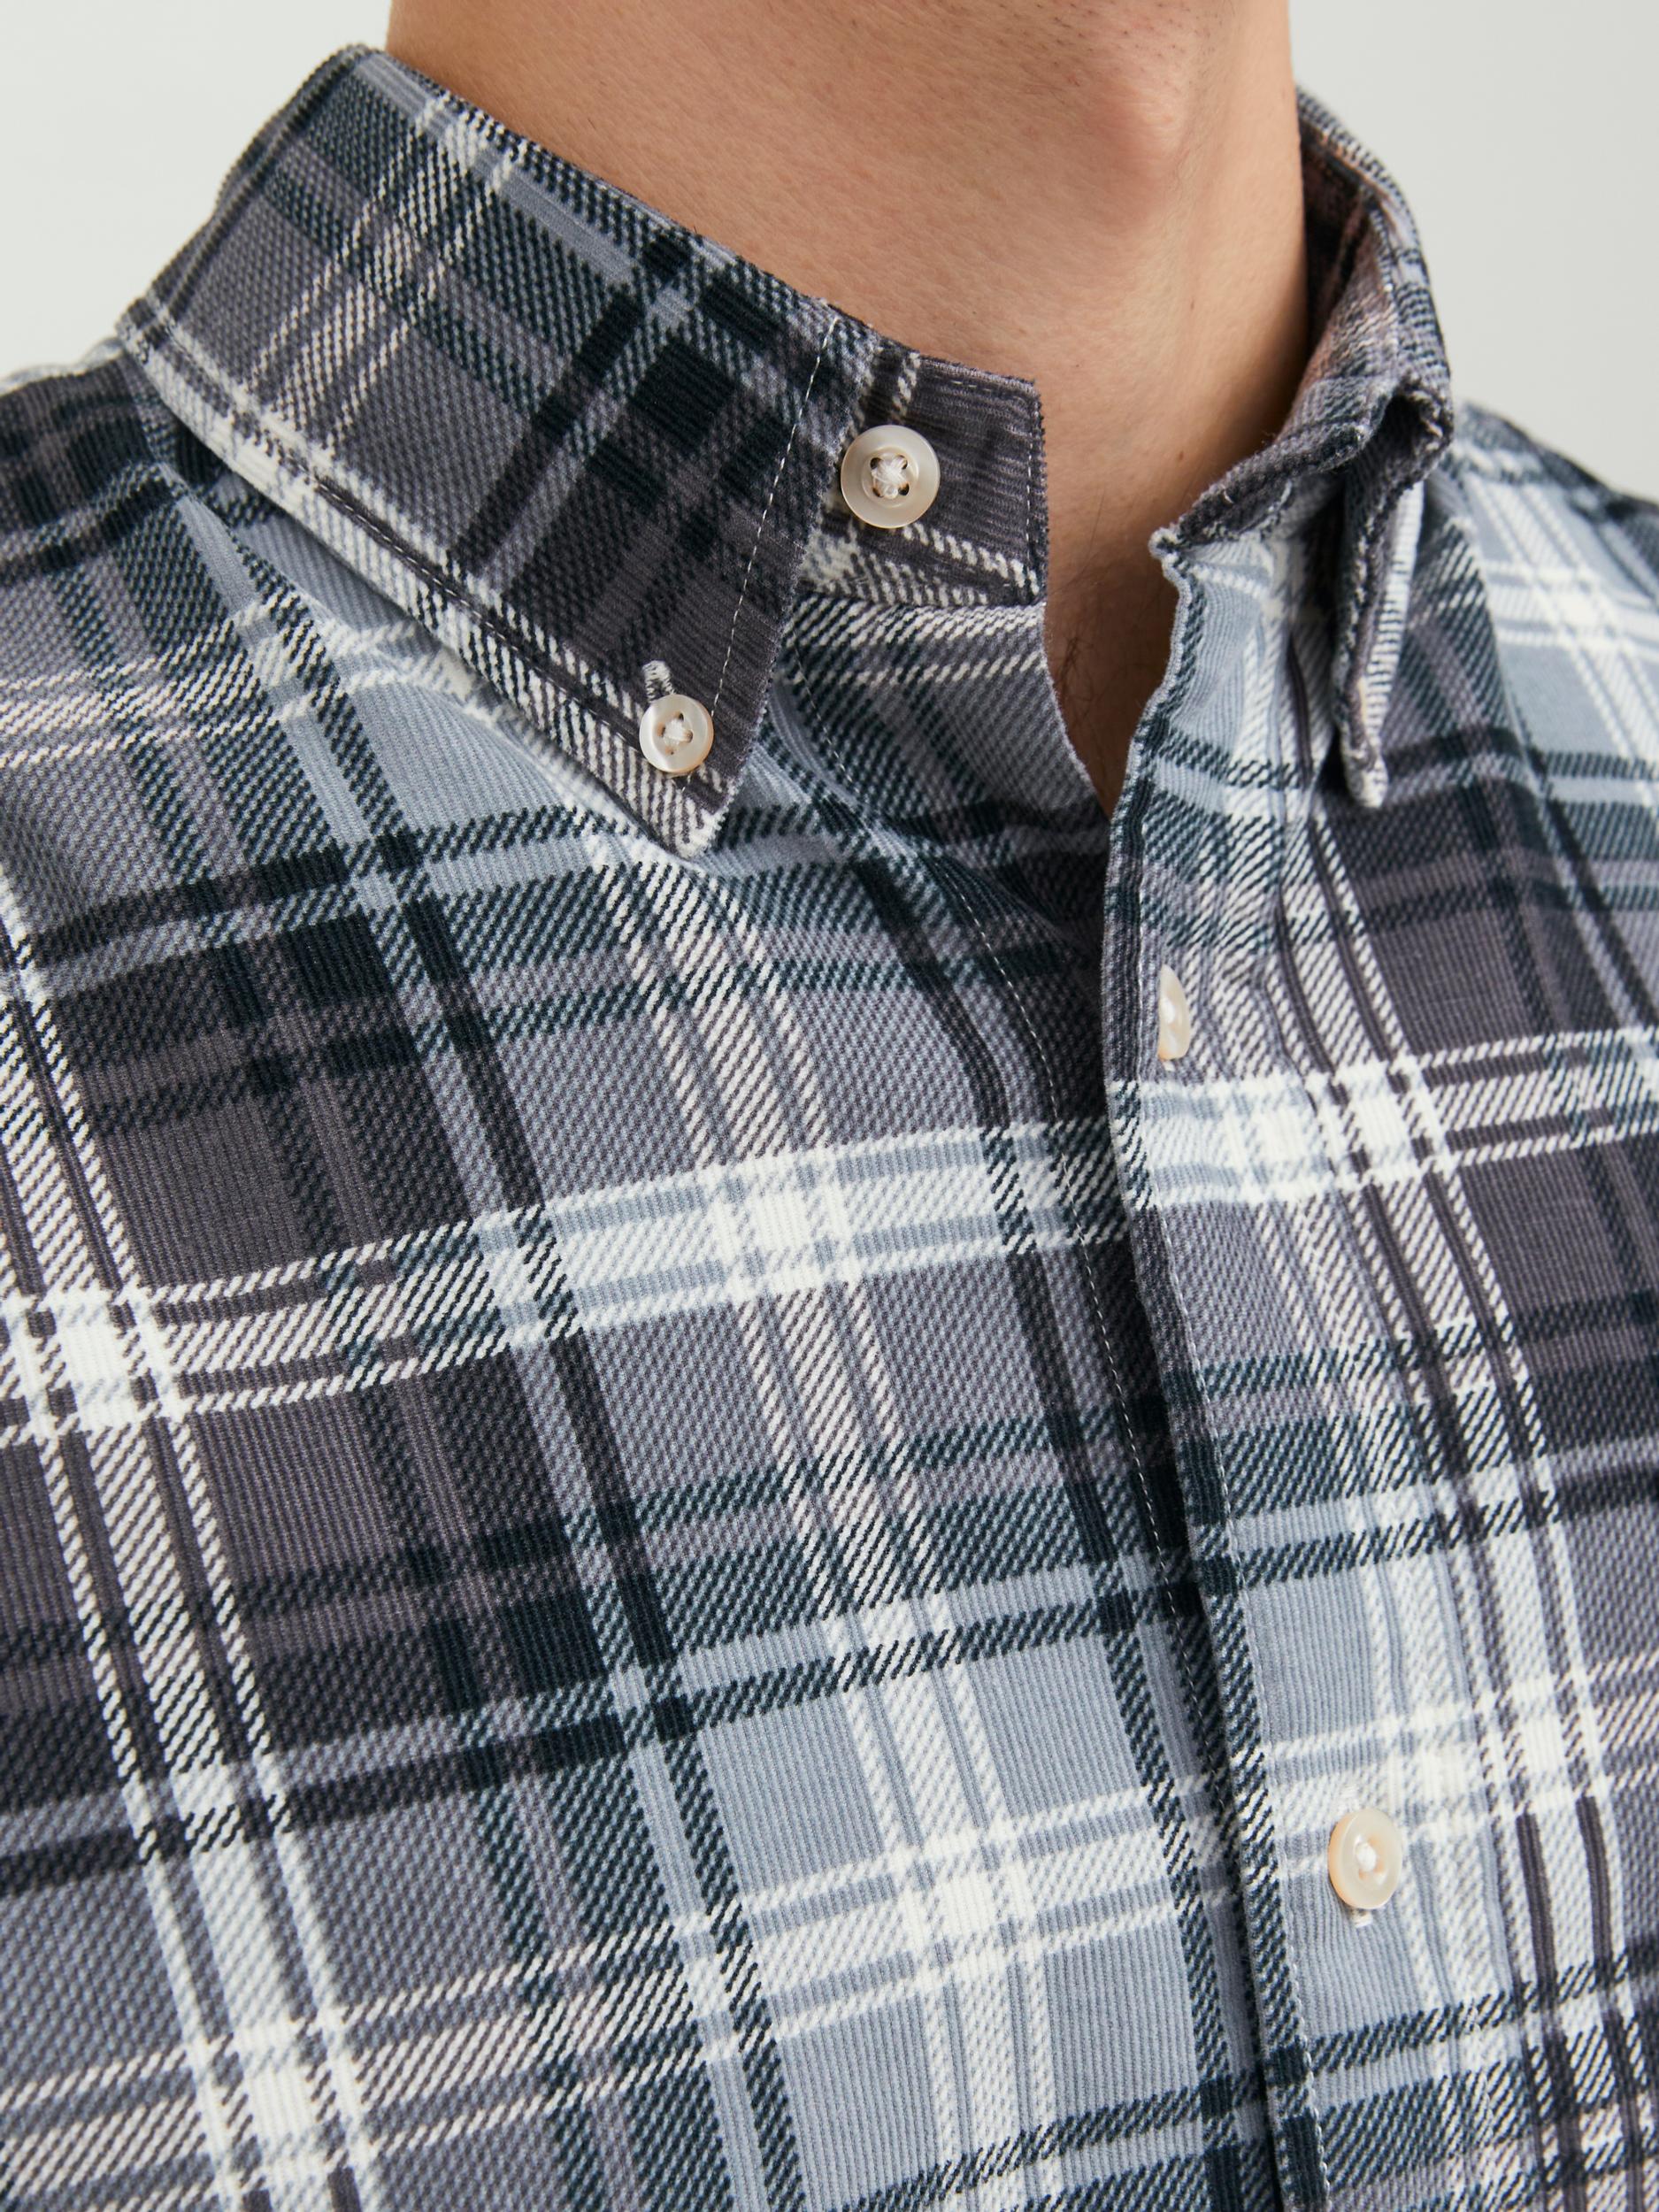 Men's Brook Cord X-mas Shirt Long Sleeve-Whisper White-Collar View